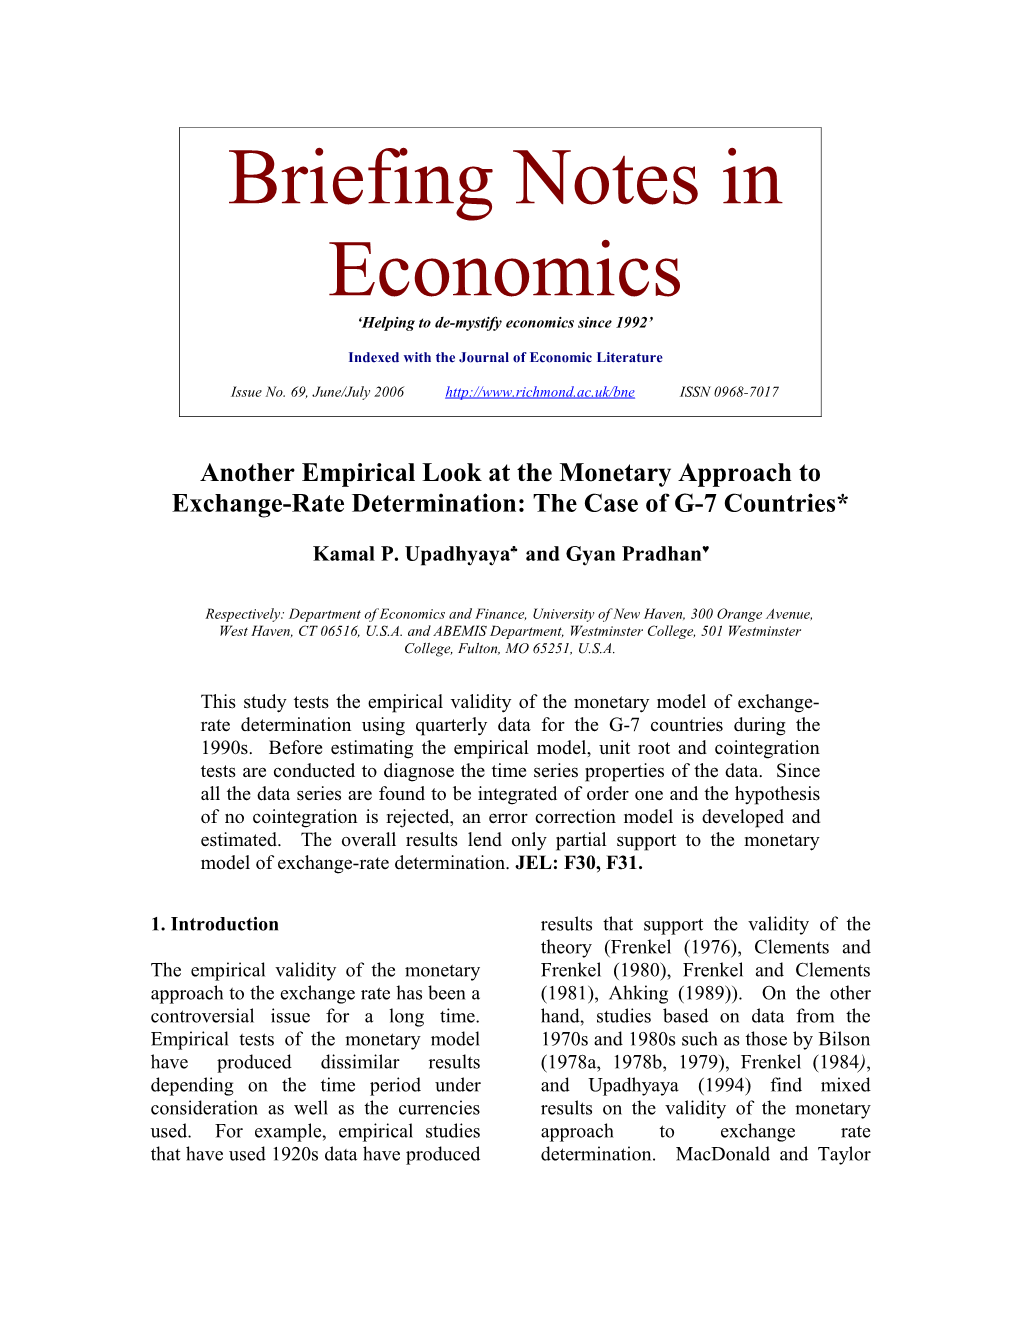 Briefing Notes in Economics Issue No. 69, June/July 2006 Kamal P. Upadhyaya and Gyan Pradhan